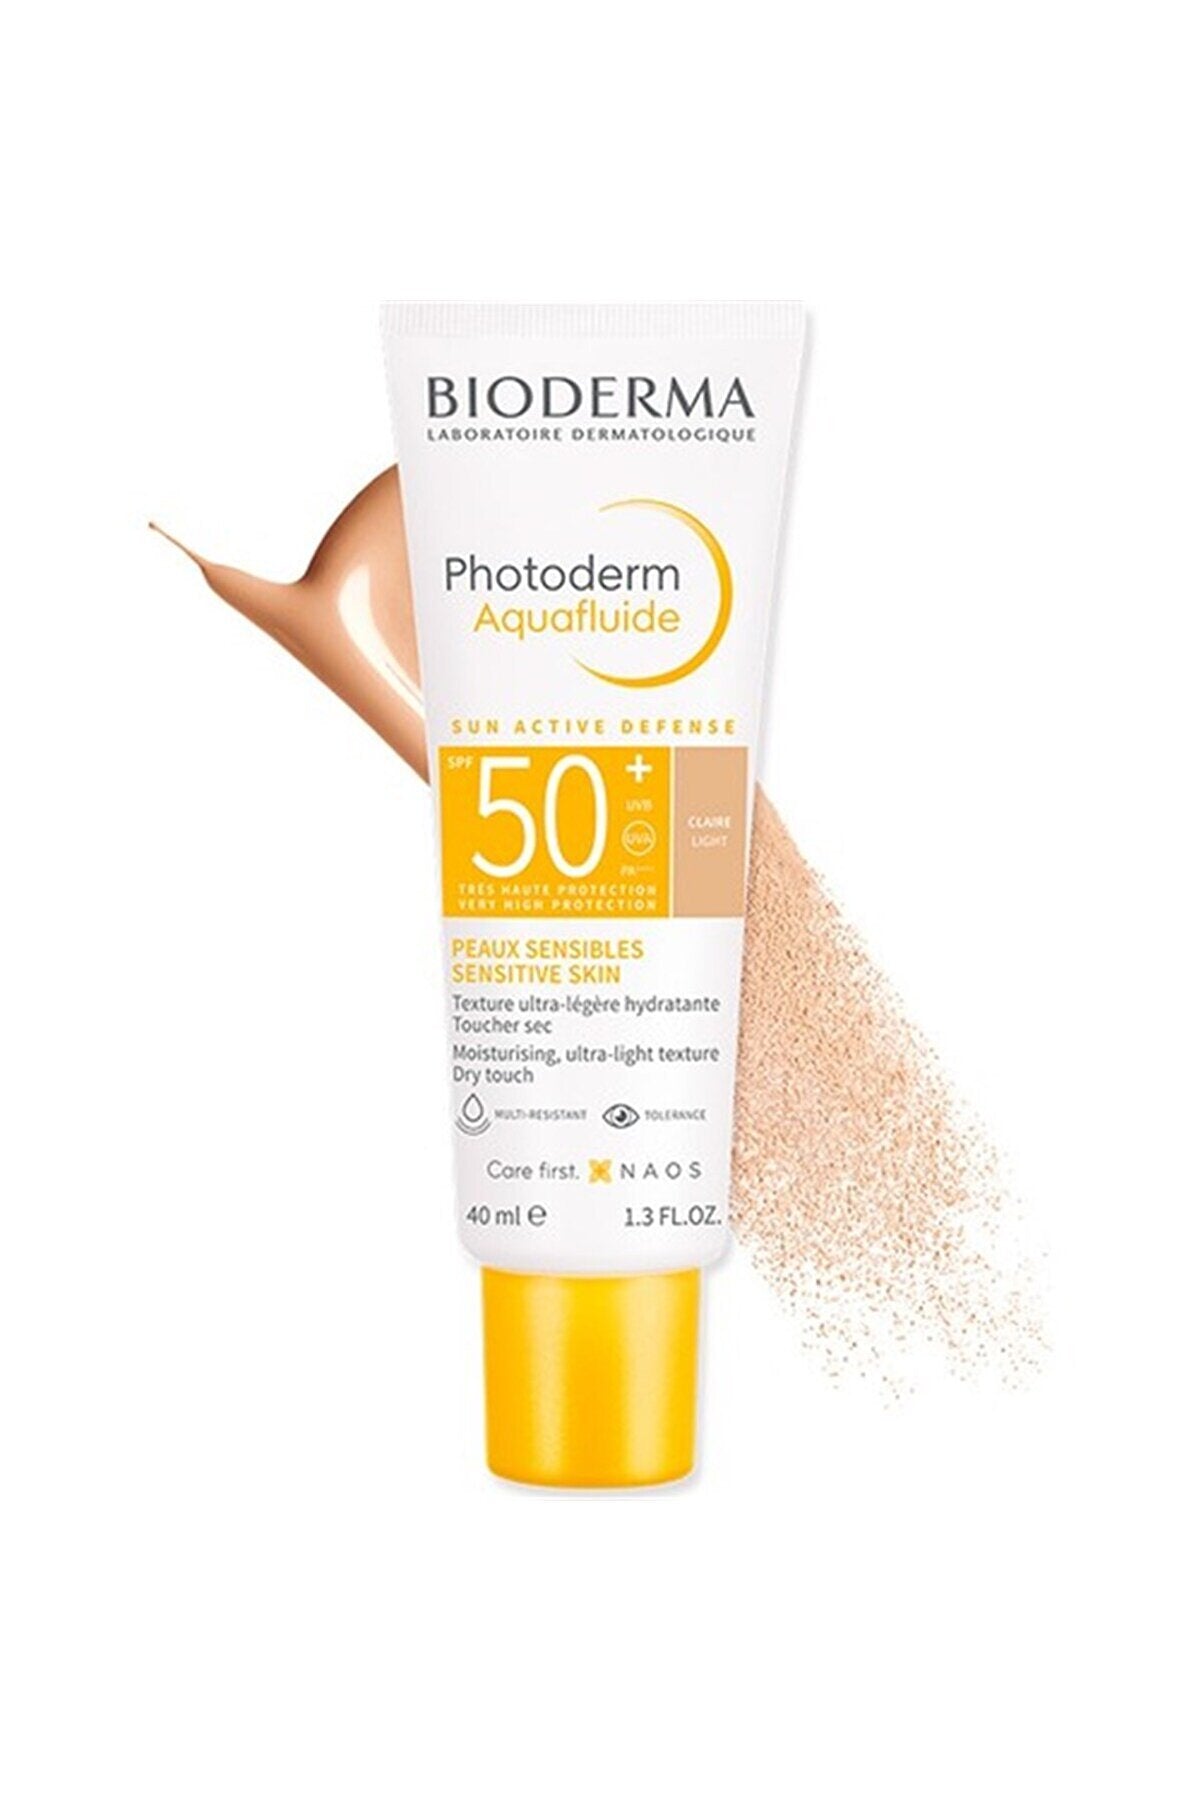 Bioderma Photoderm SPF 50+ Aquafluide Tinted Sunscreen 40 ml - Light Bioderma